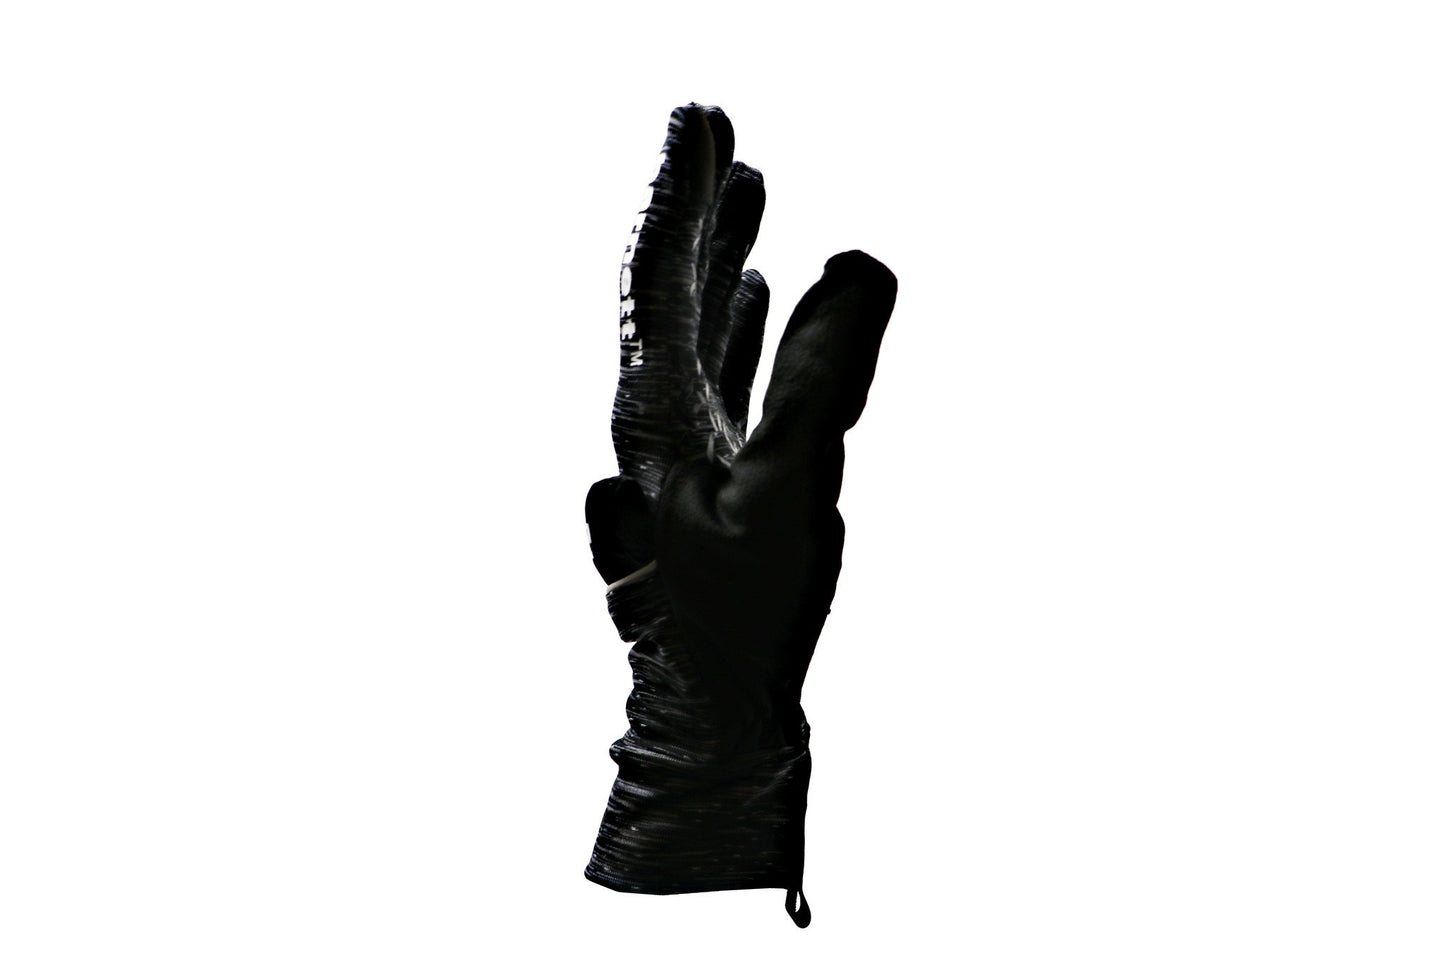 NBG-13 winter ski glove -5 ° to -10 °